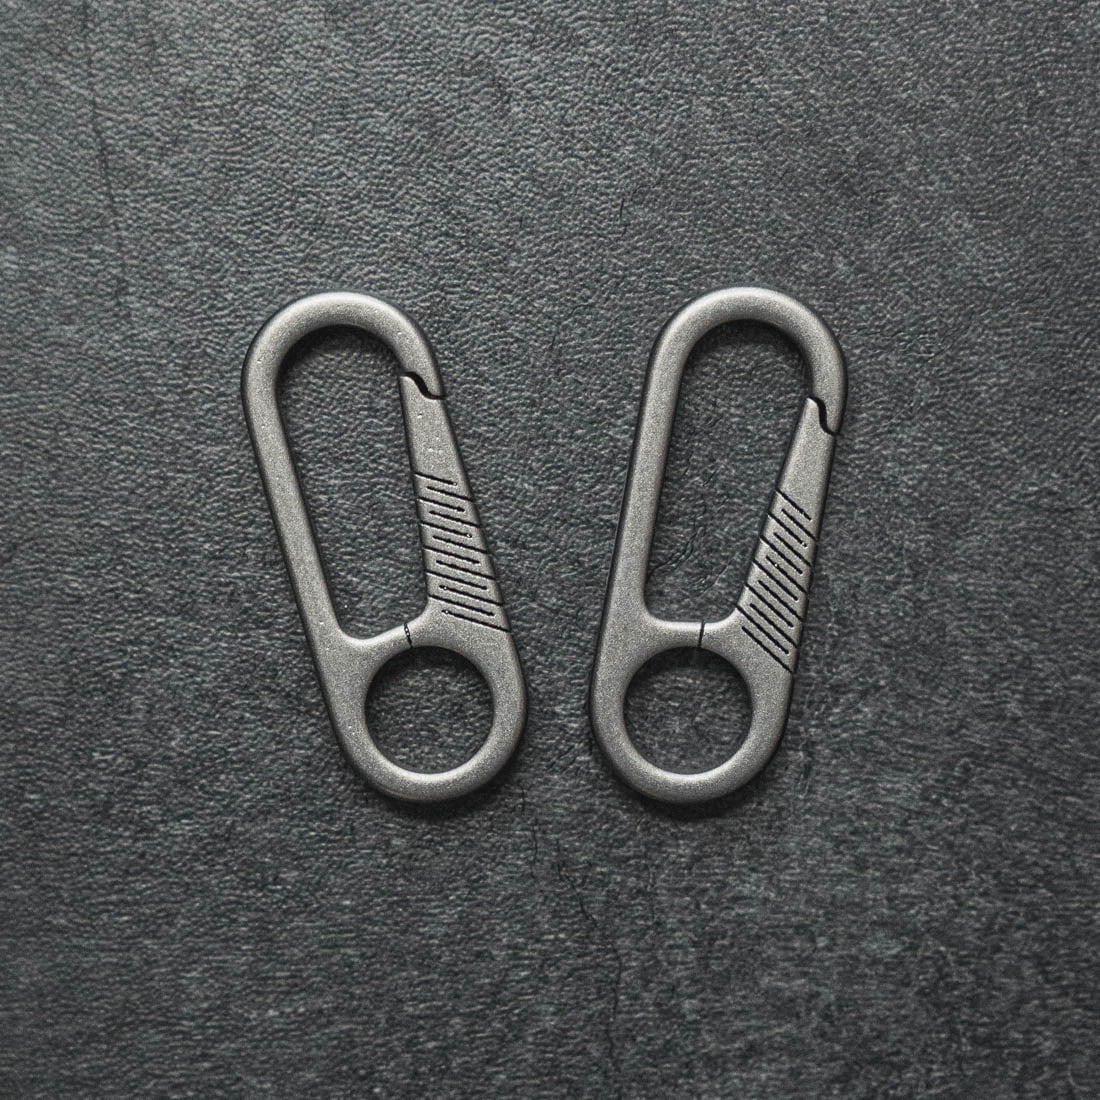 Fero Ti: Titanium Quick Release Mini Key Clips - Set of 2